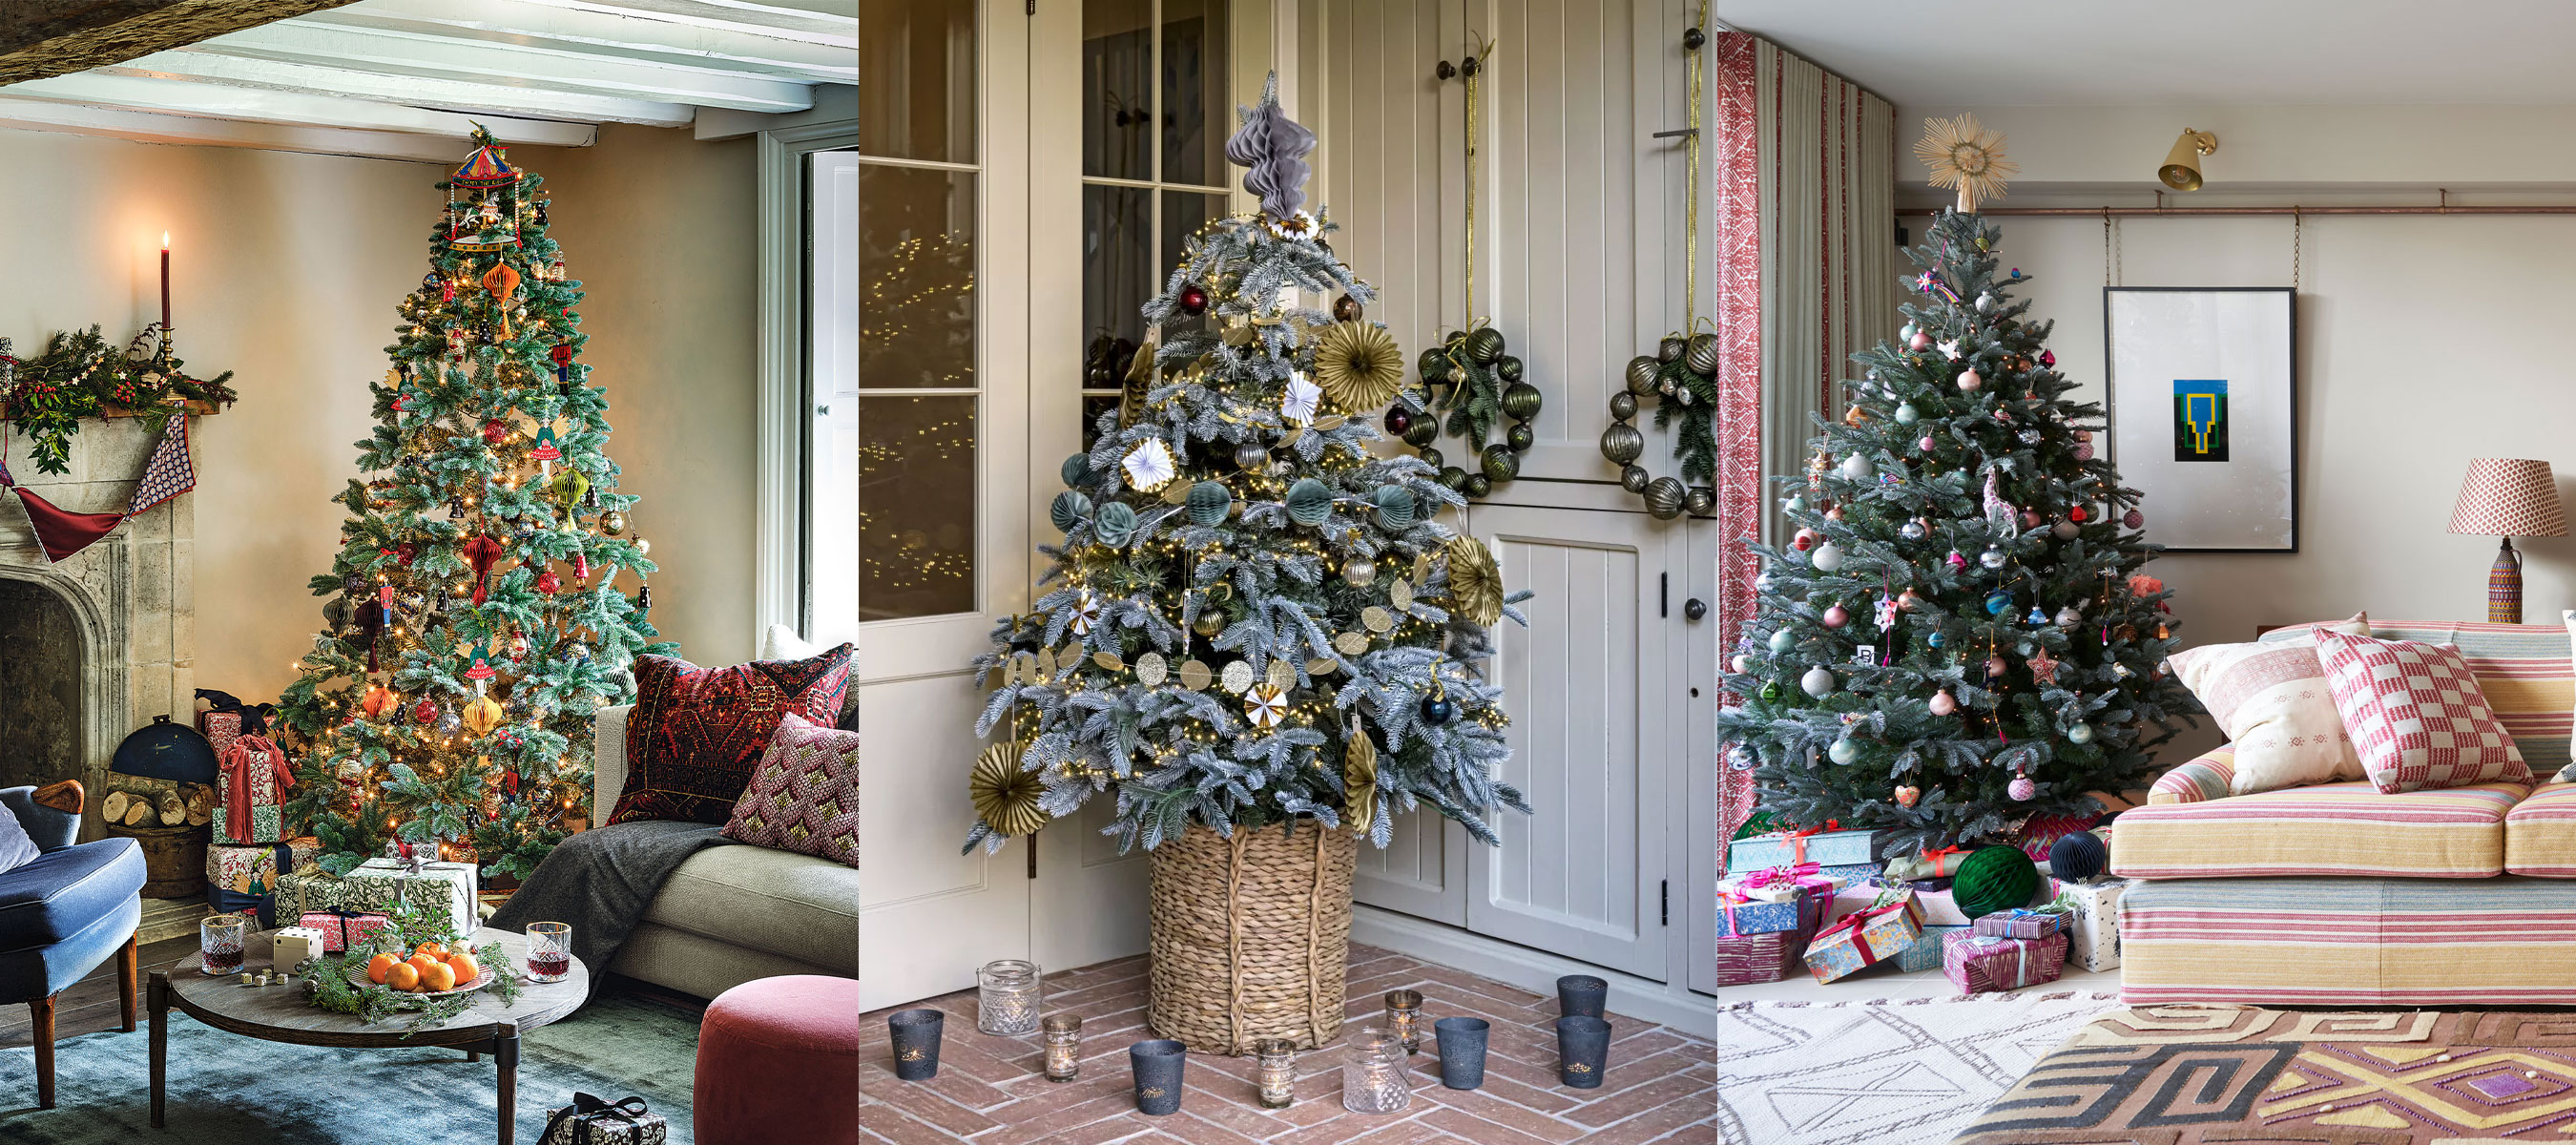 Christmas Straw Ornaments, Christmas Decor - Star Tree Topper